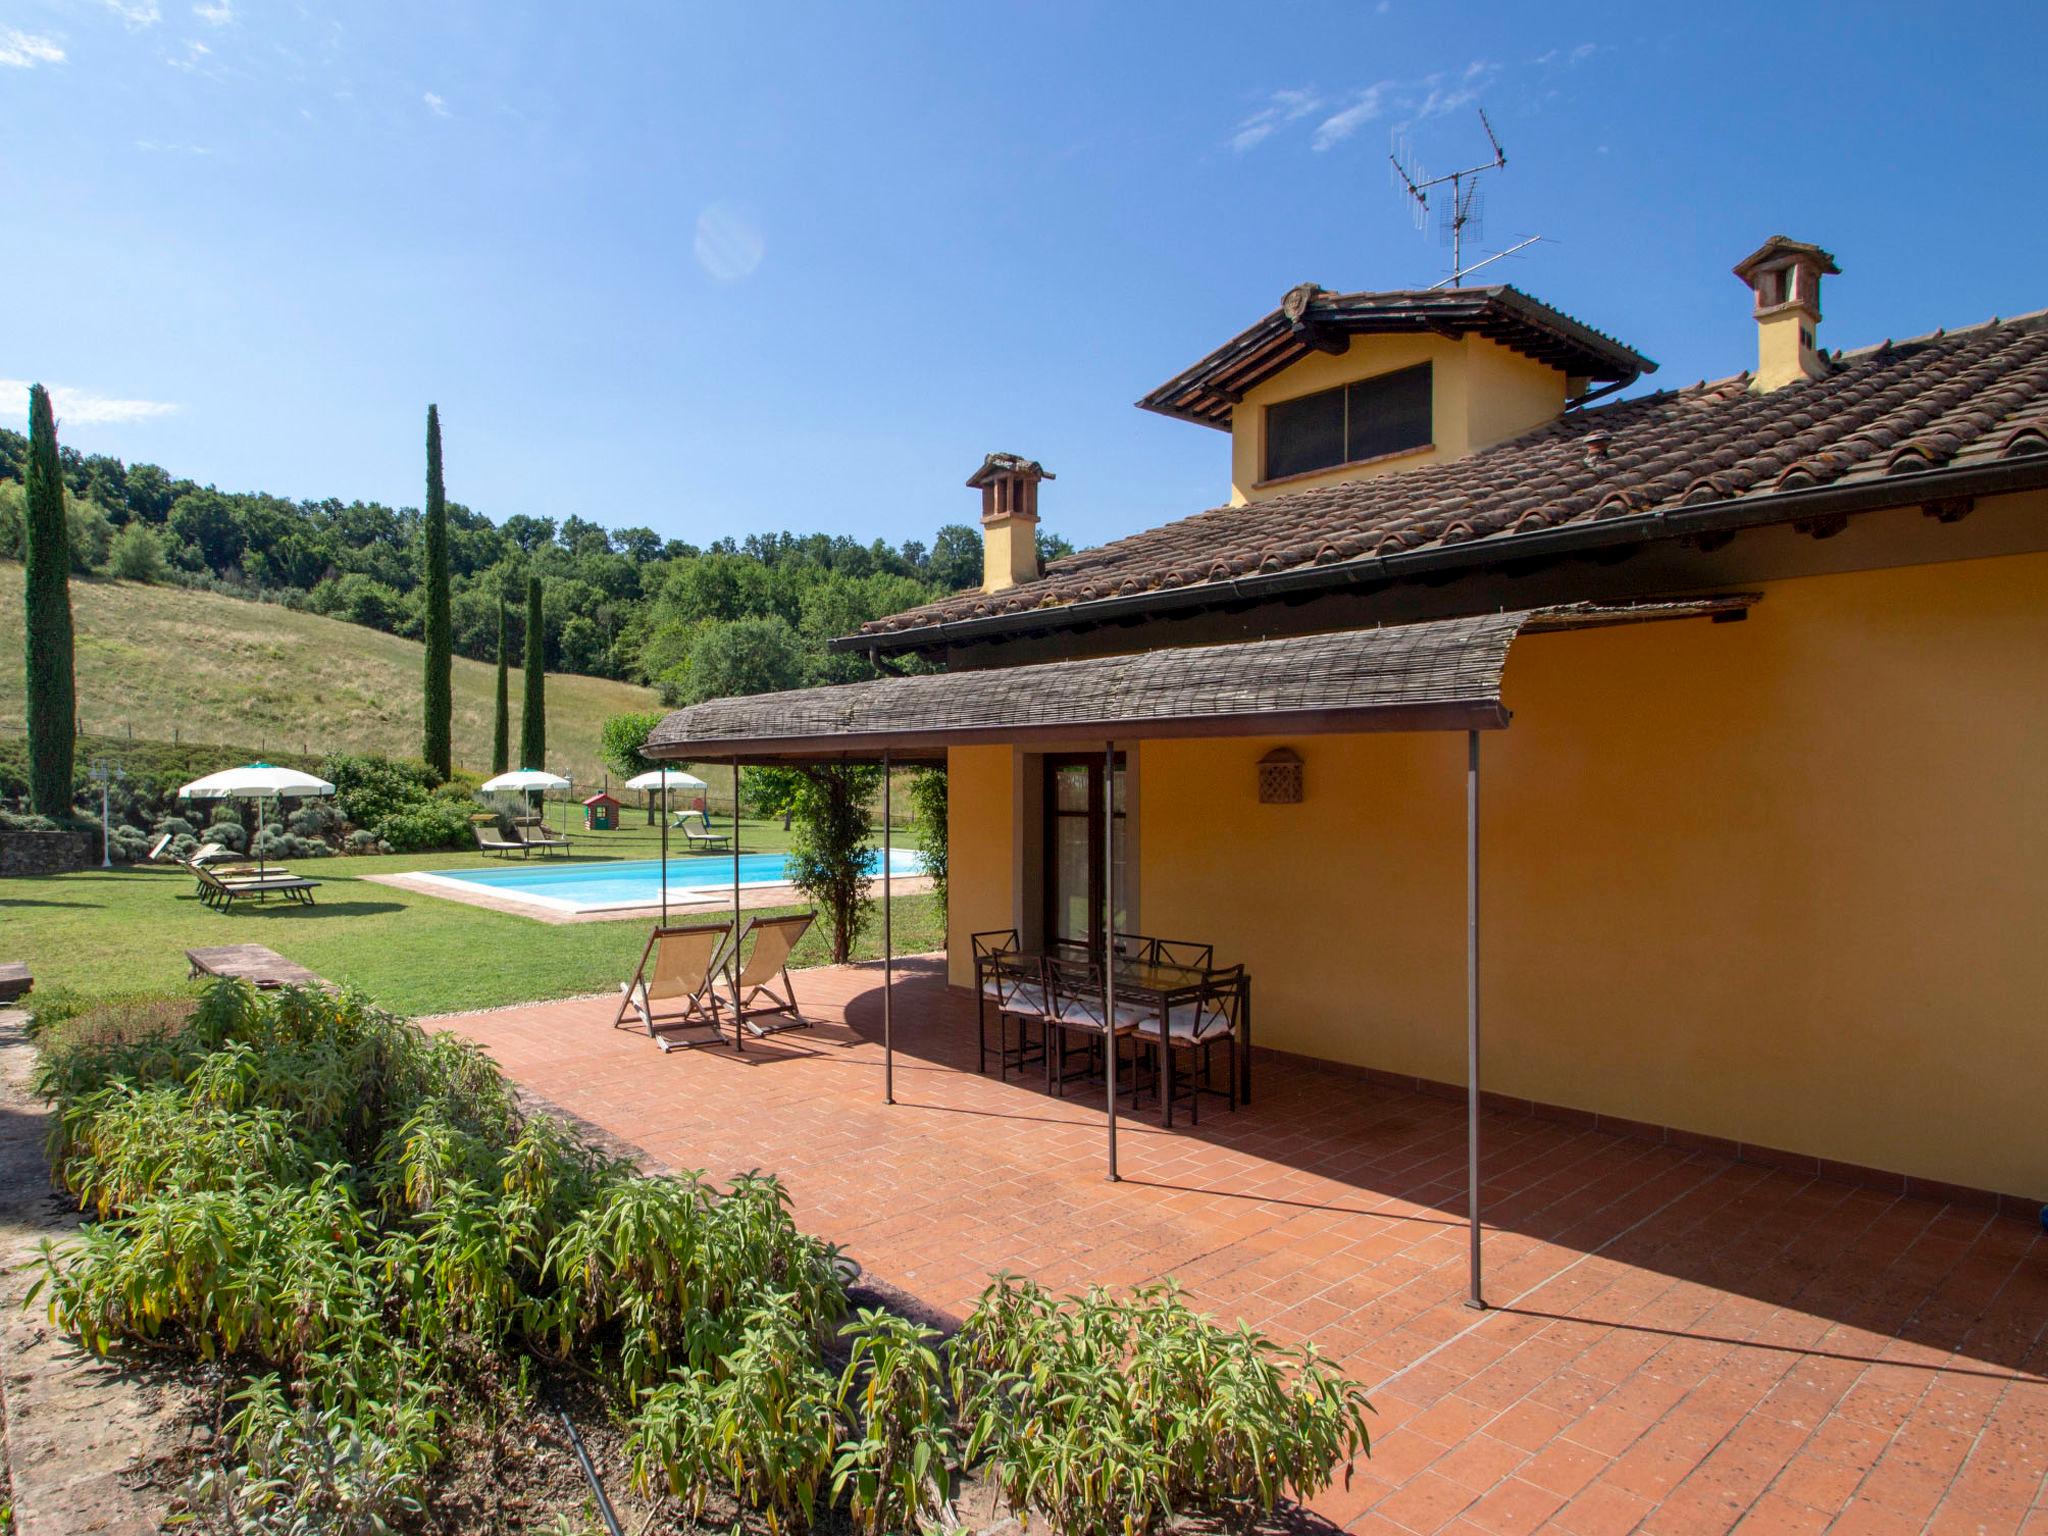 Photo 1 - Appartement de 2 chambres à San Giovanni Valdarno avec piscine et terrasse